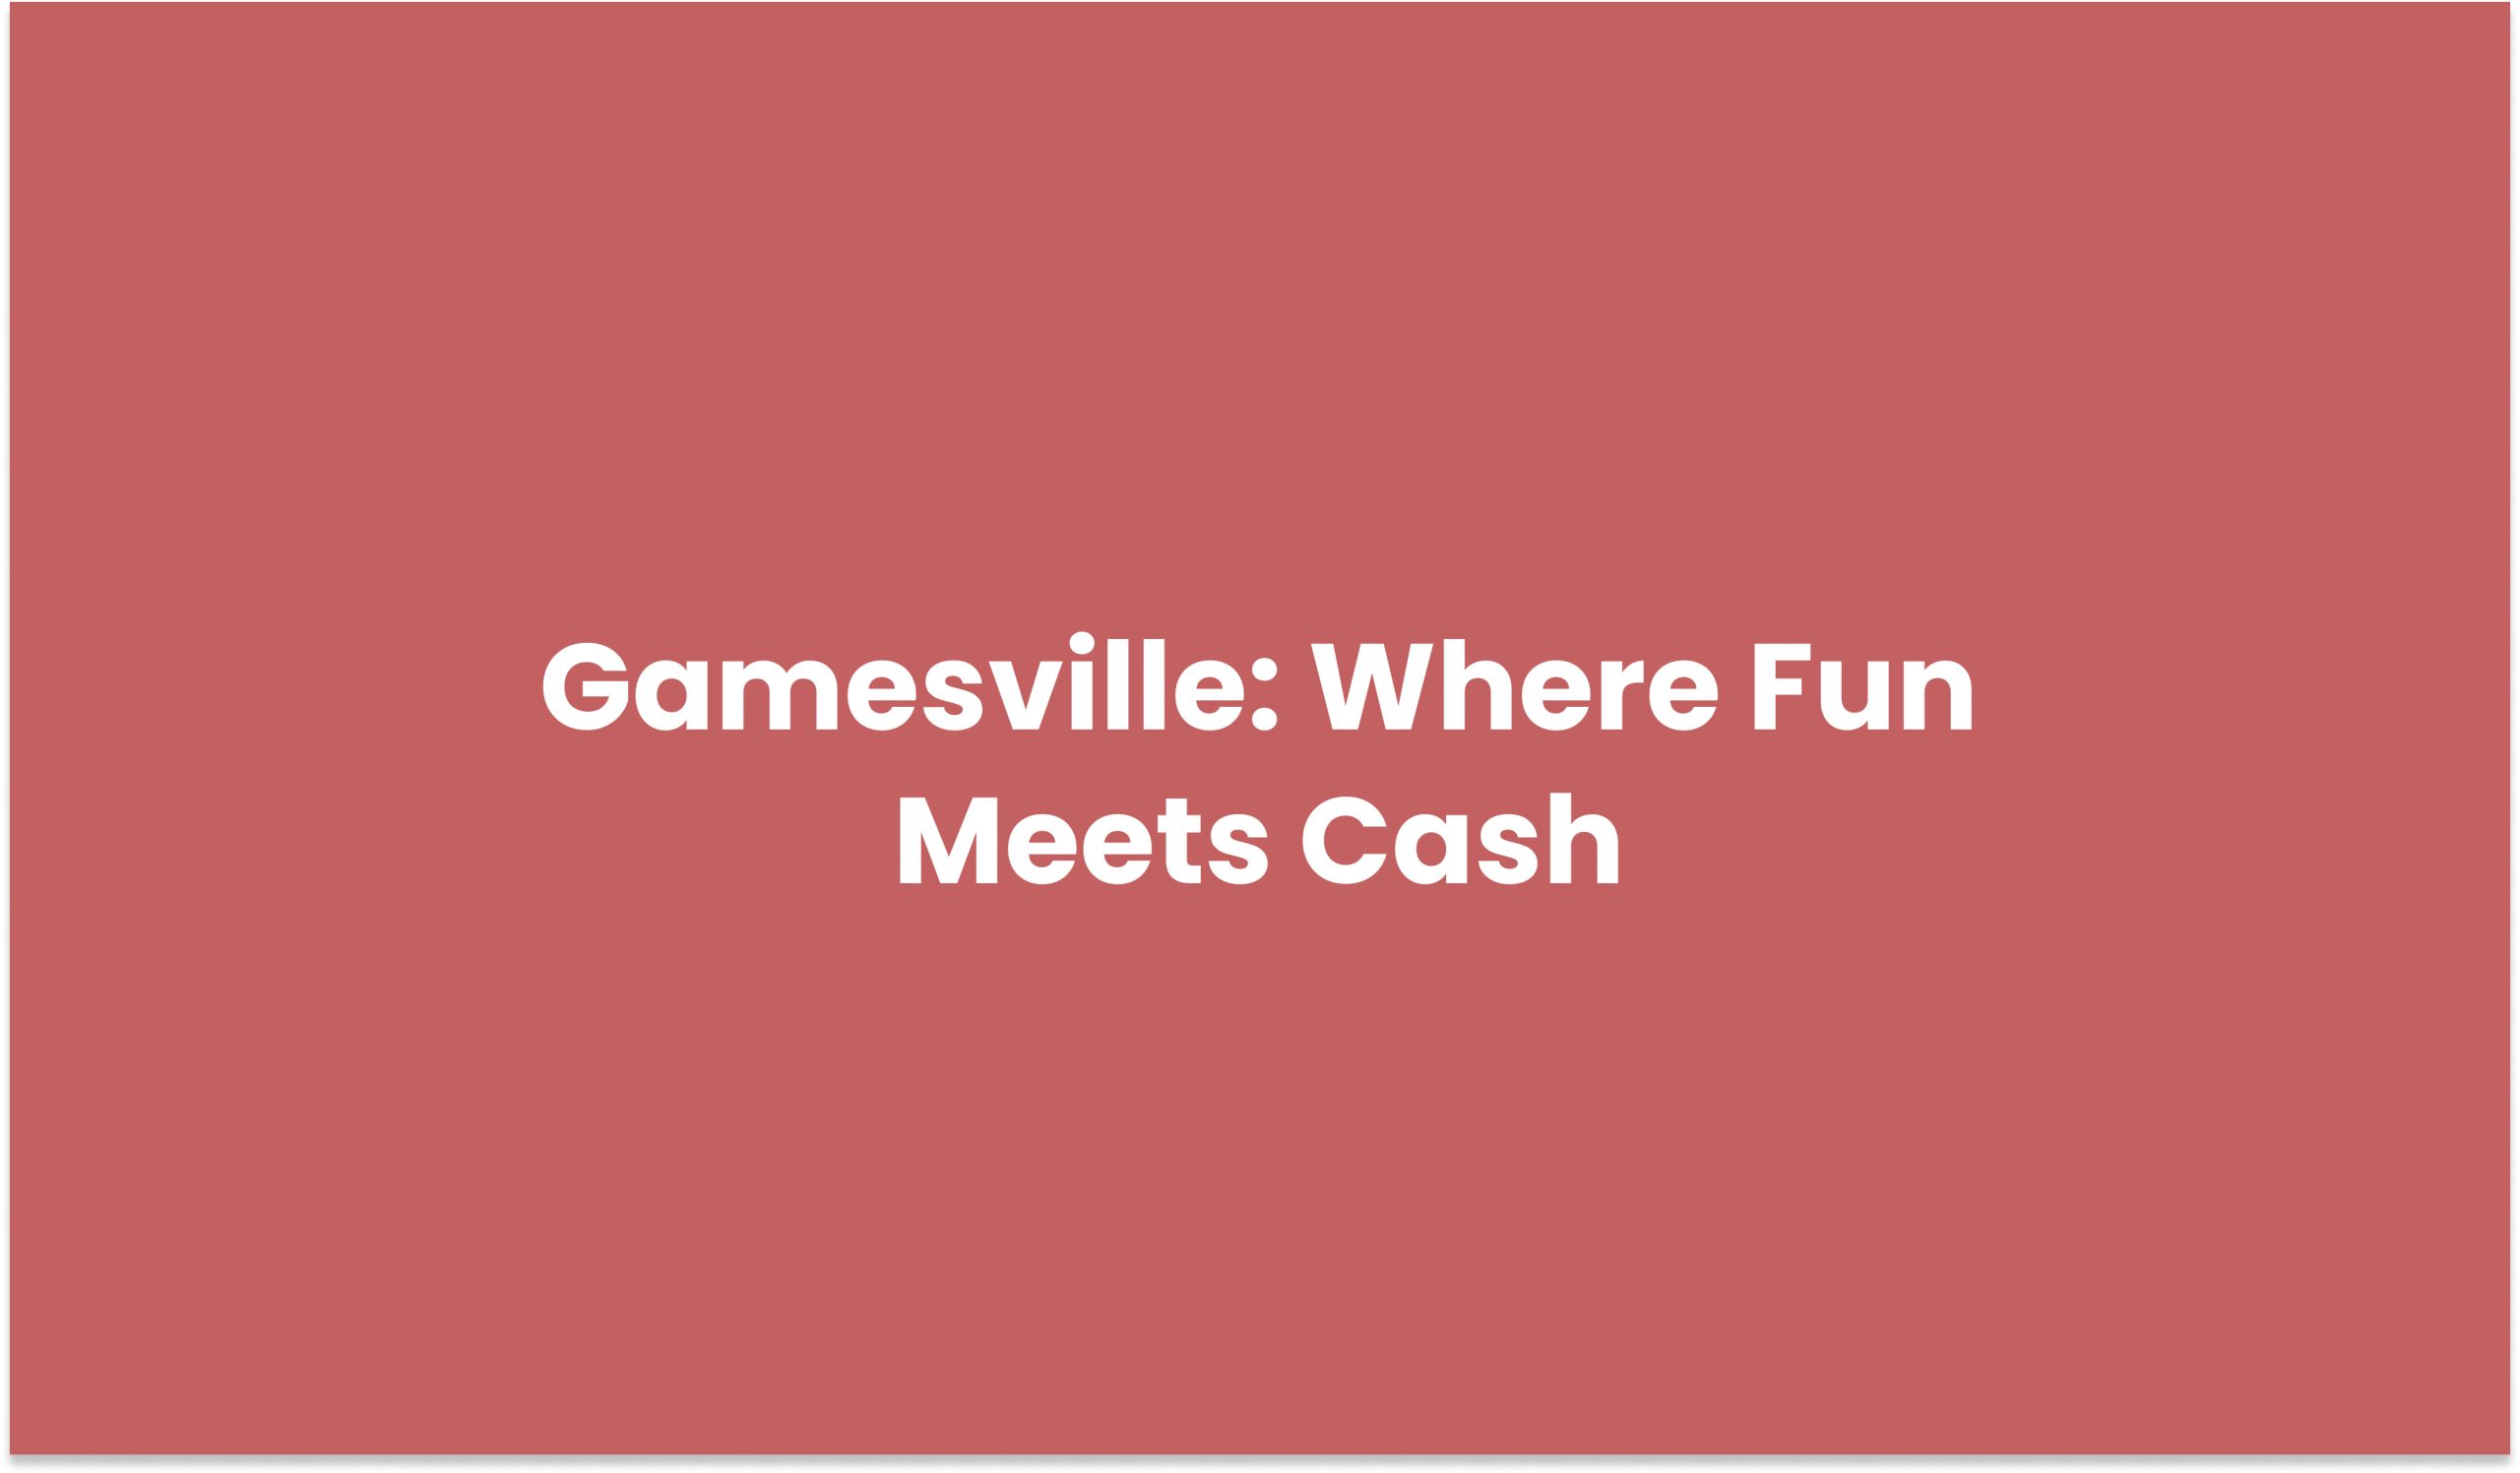 Gamesville: Where Fun Meets Cash